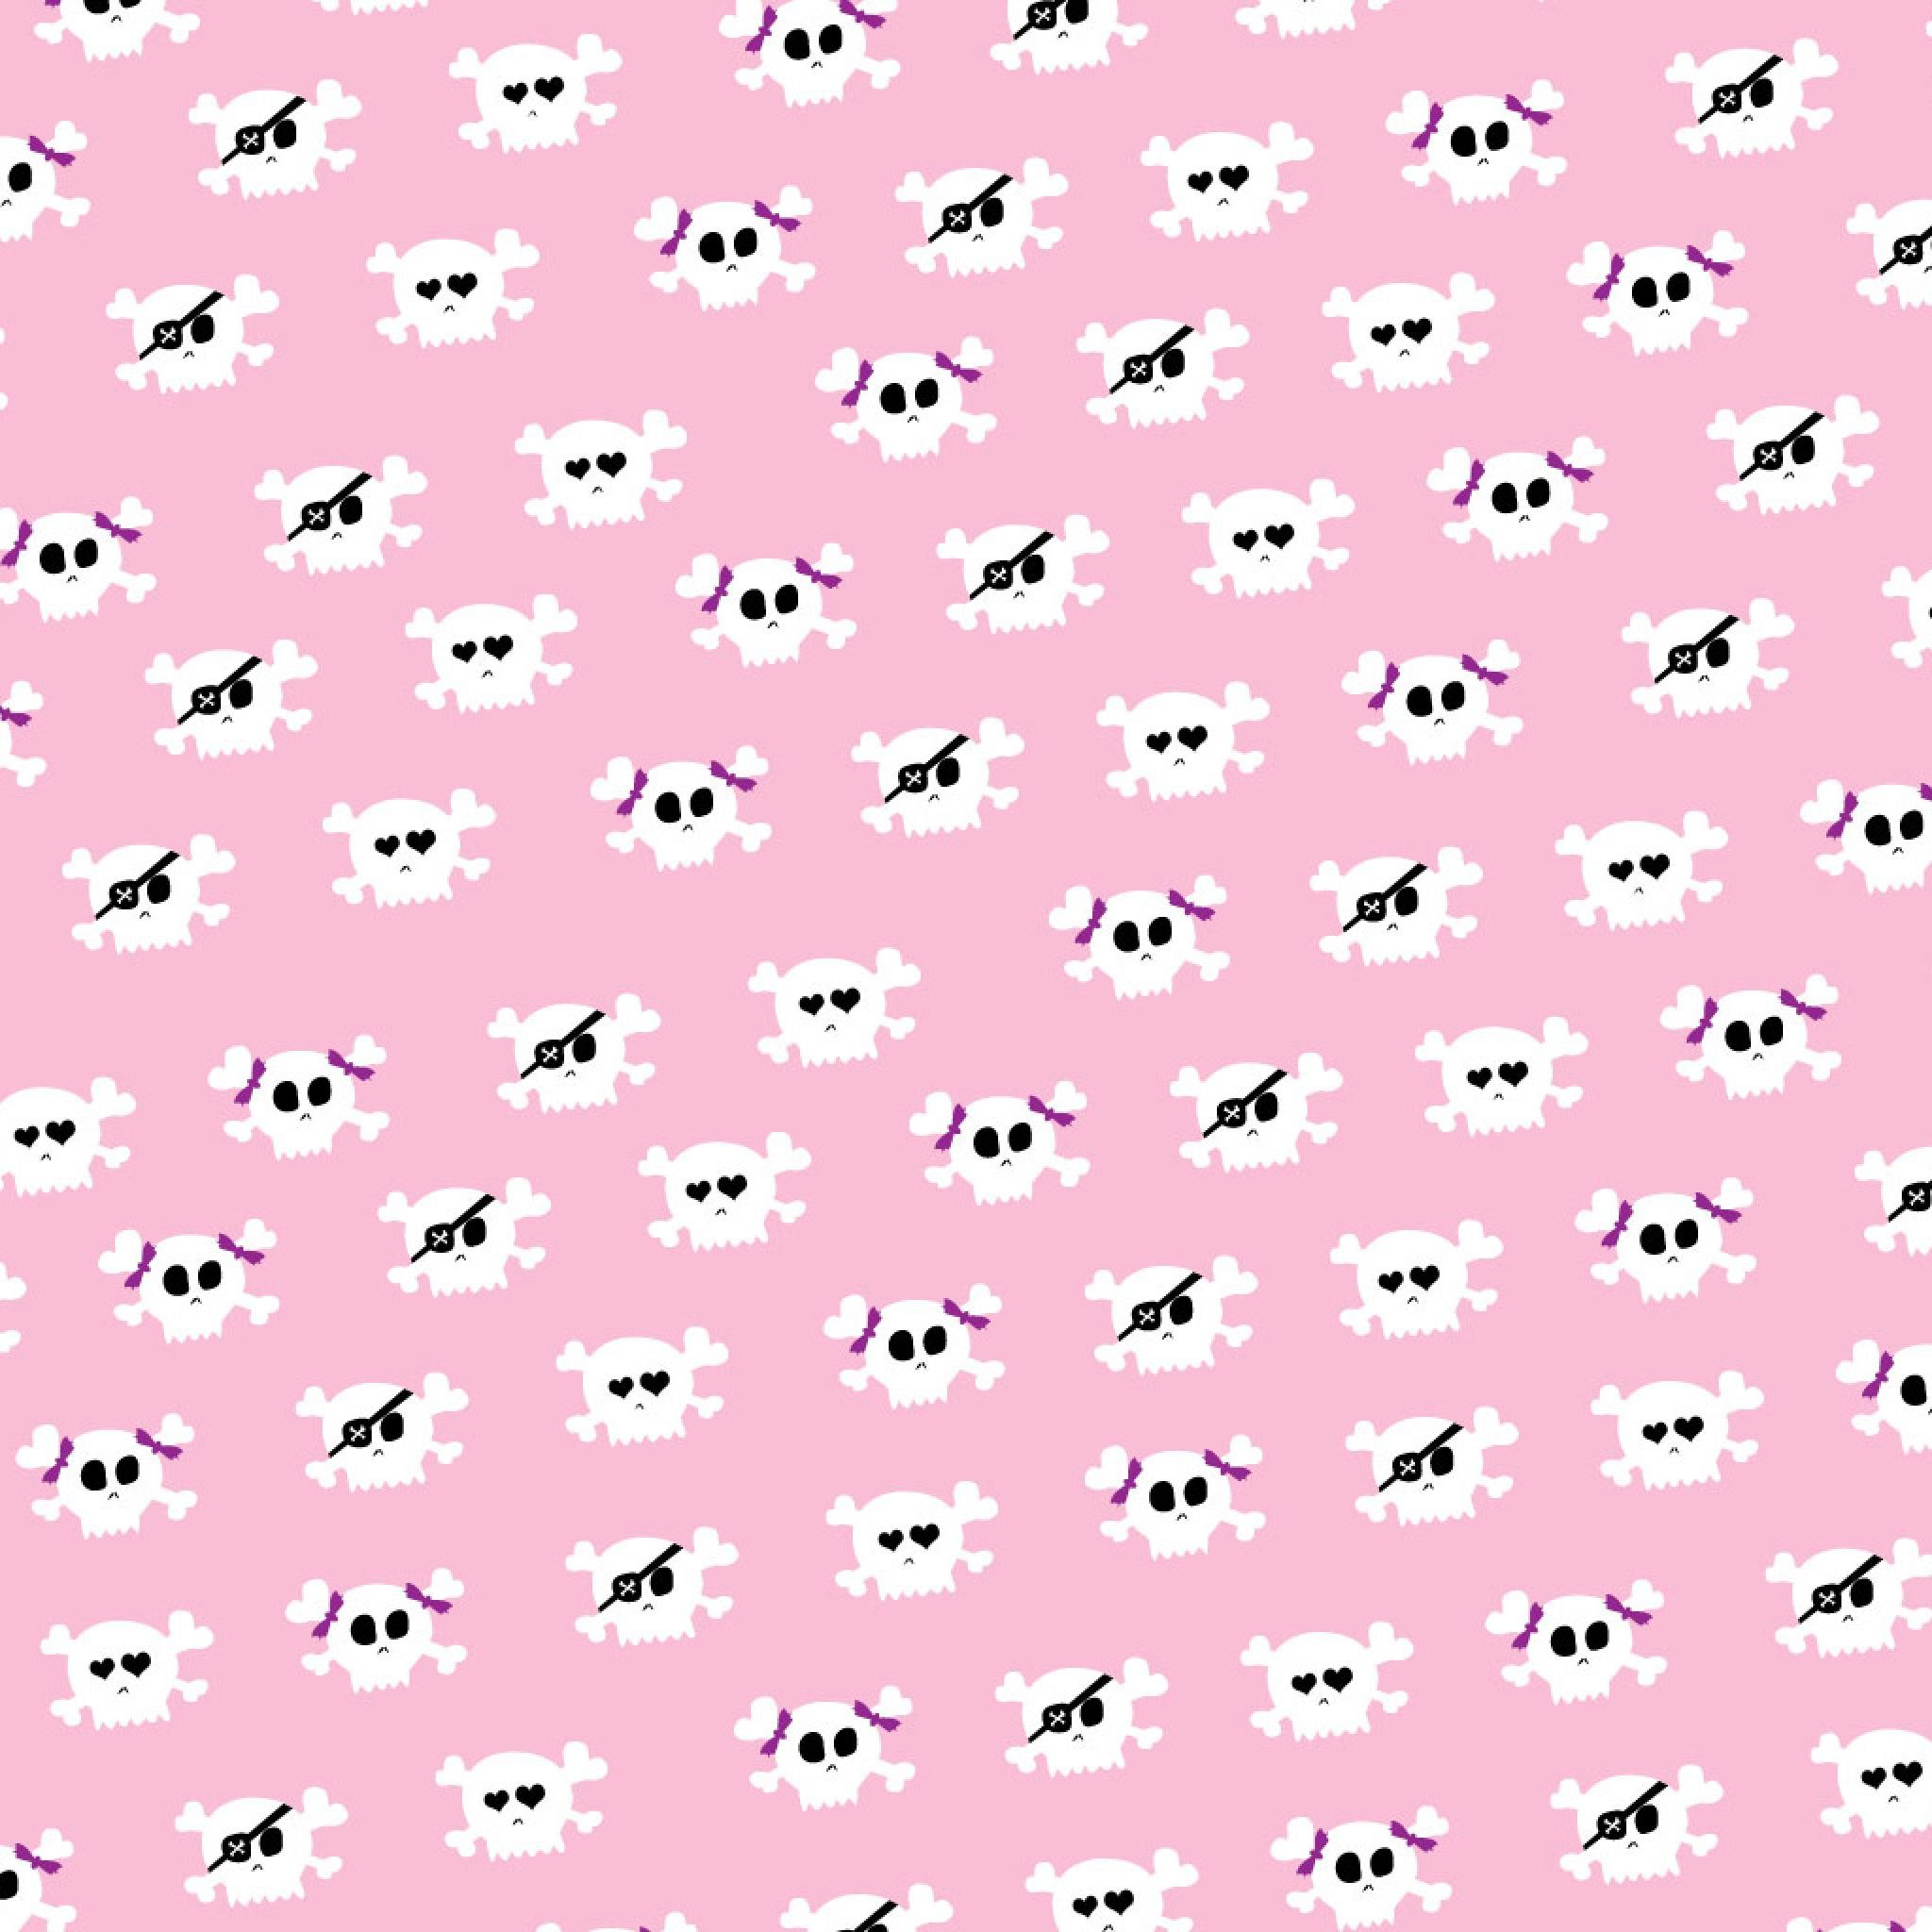 2048x2048 Girly HD Wallpapers for Desktop | Fun/Humor – Pink Girly-Style Skulls  Pattern